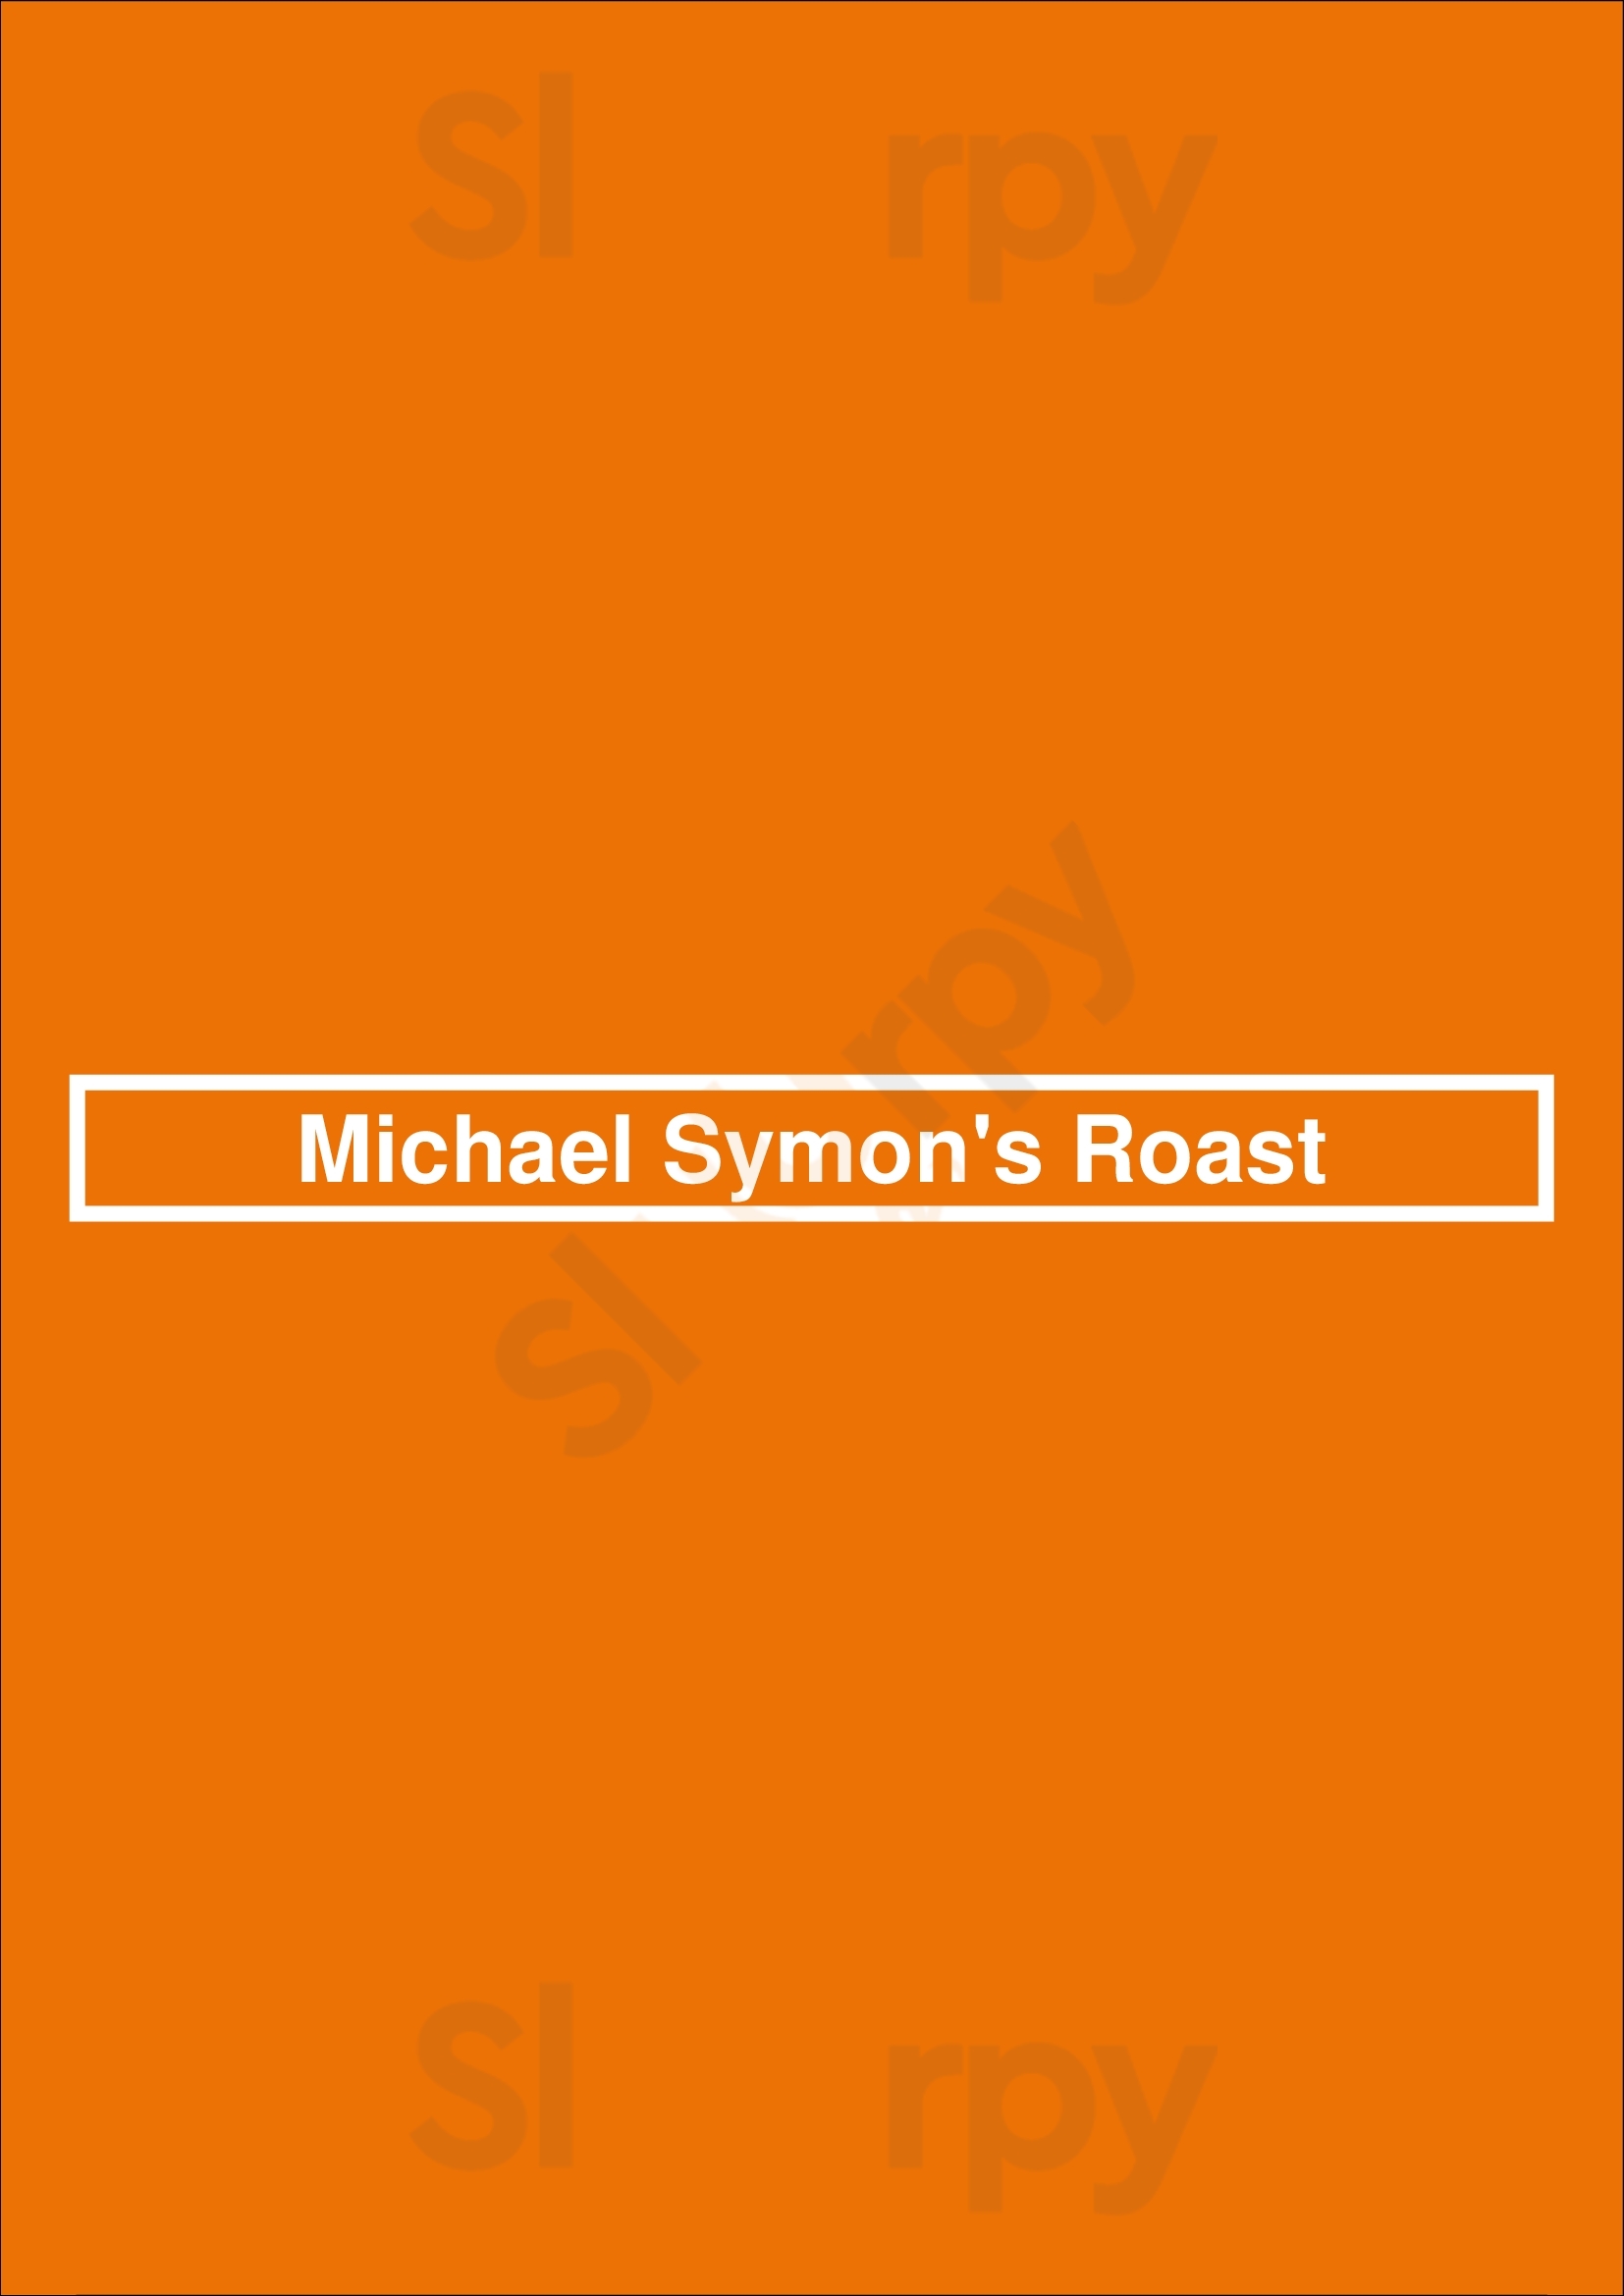 Michael Symon's Roast Detroit Menu - 1